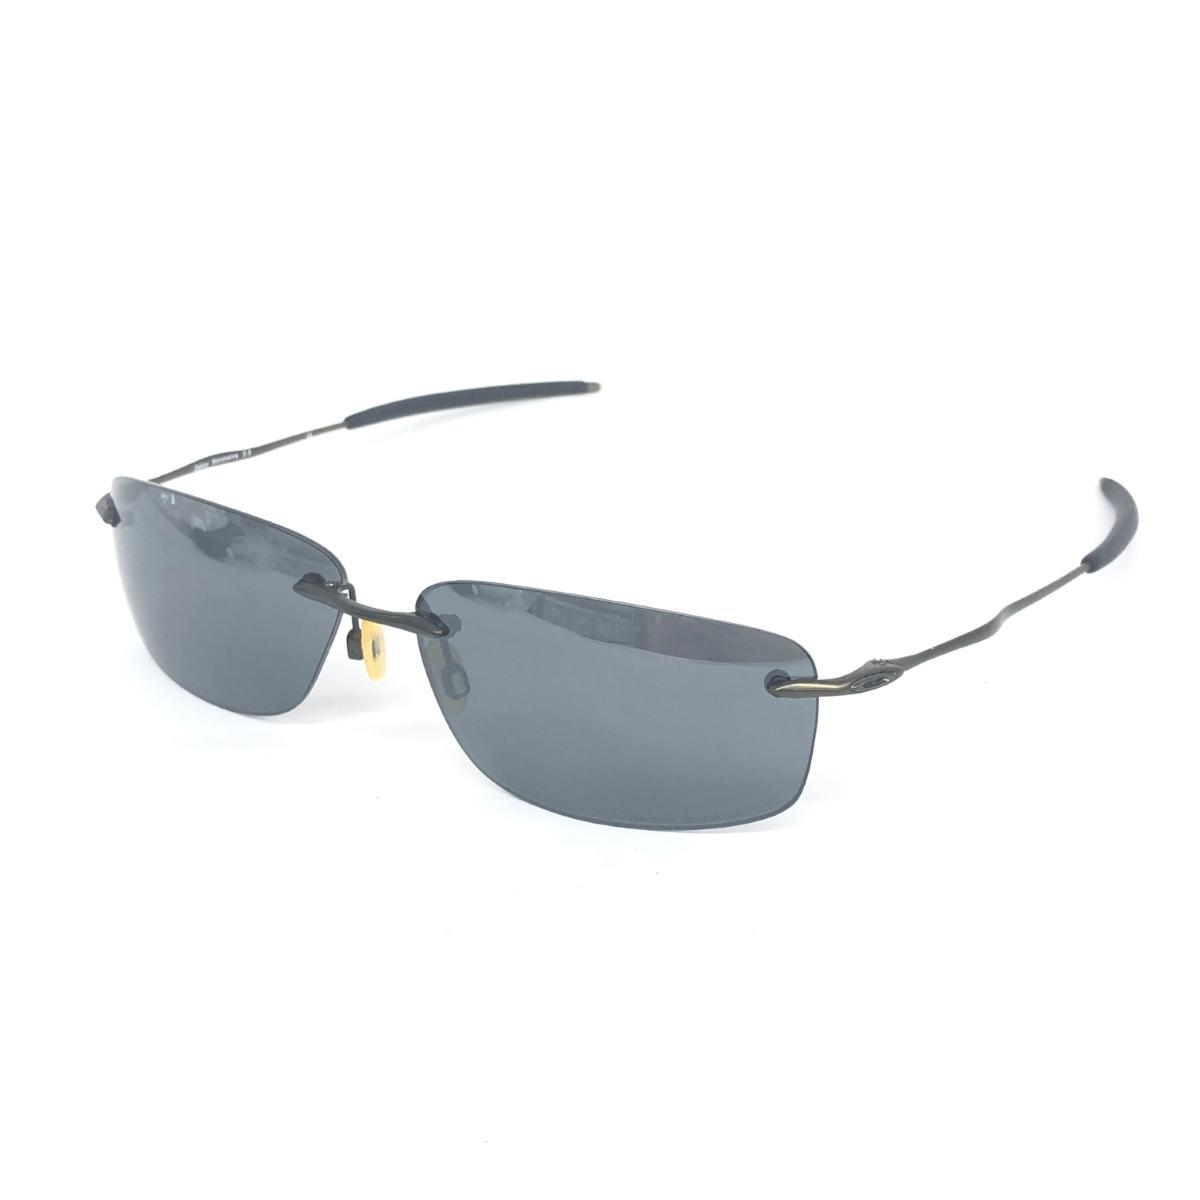 ◆OAKLEY オークリー サングラス◆ ブラック ナノワイヤー2.0 偏光レンズ メンズ メガネ 眼鏡 sunglasses 服飾小物